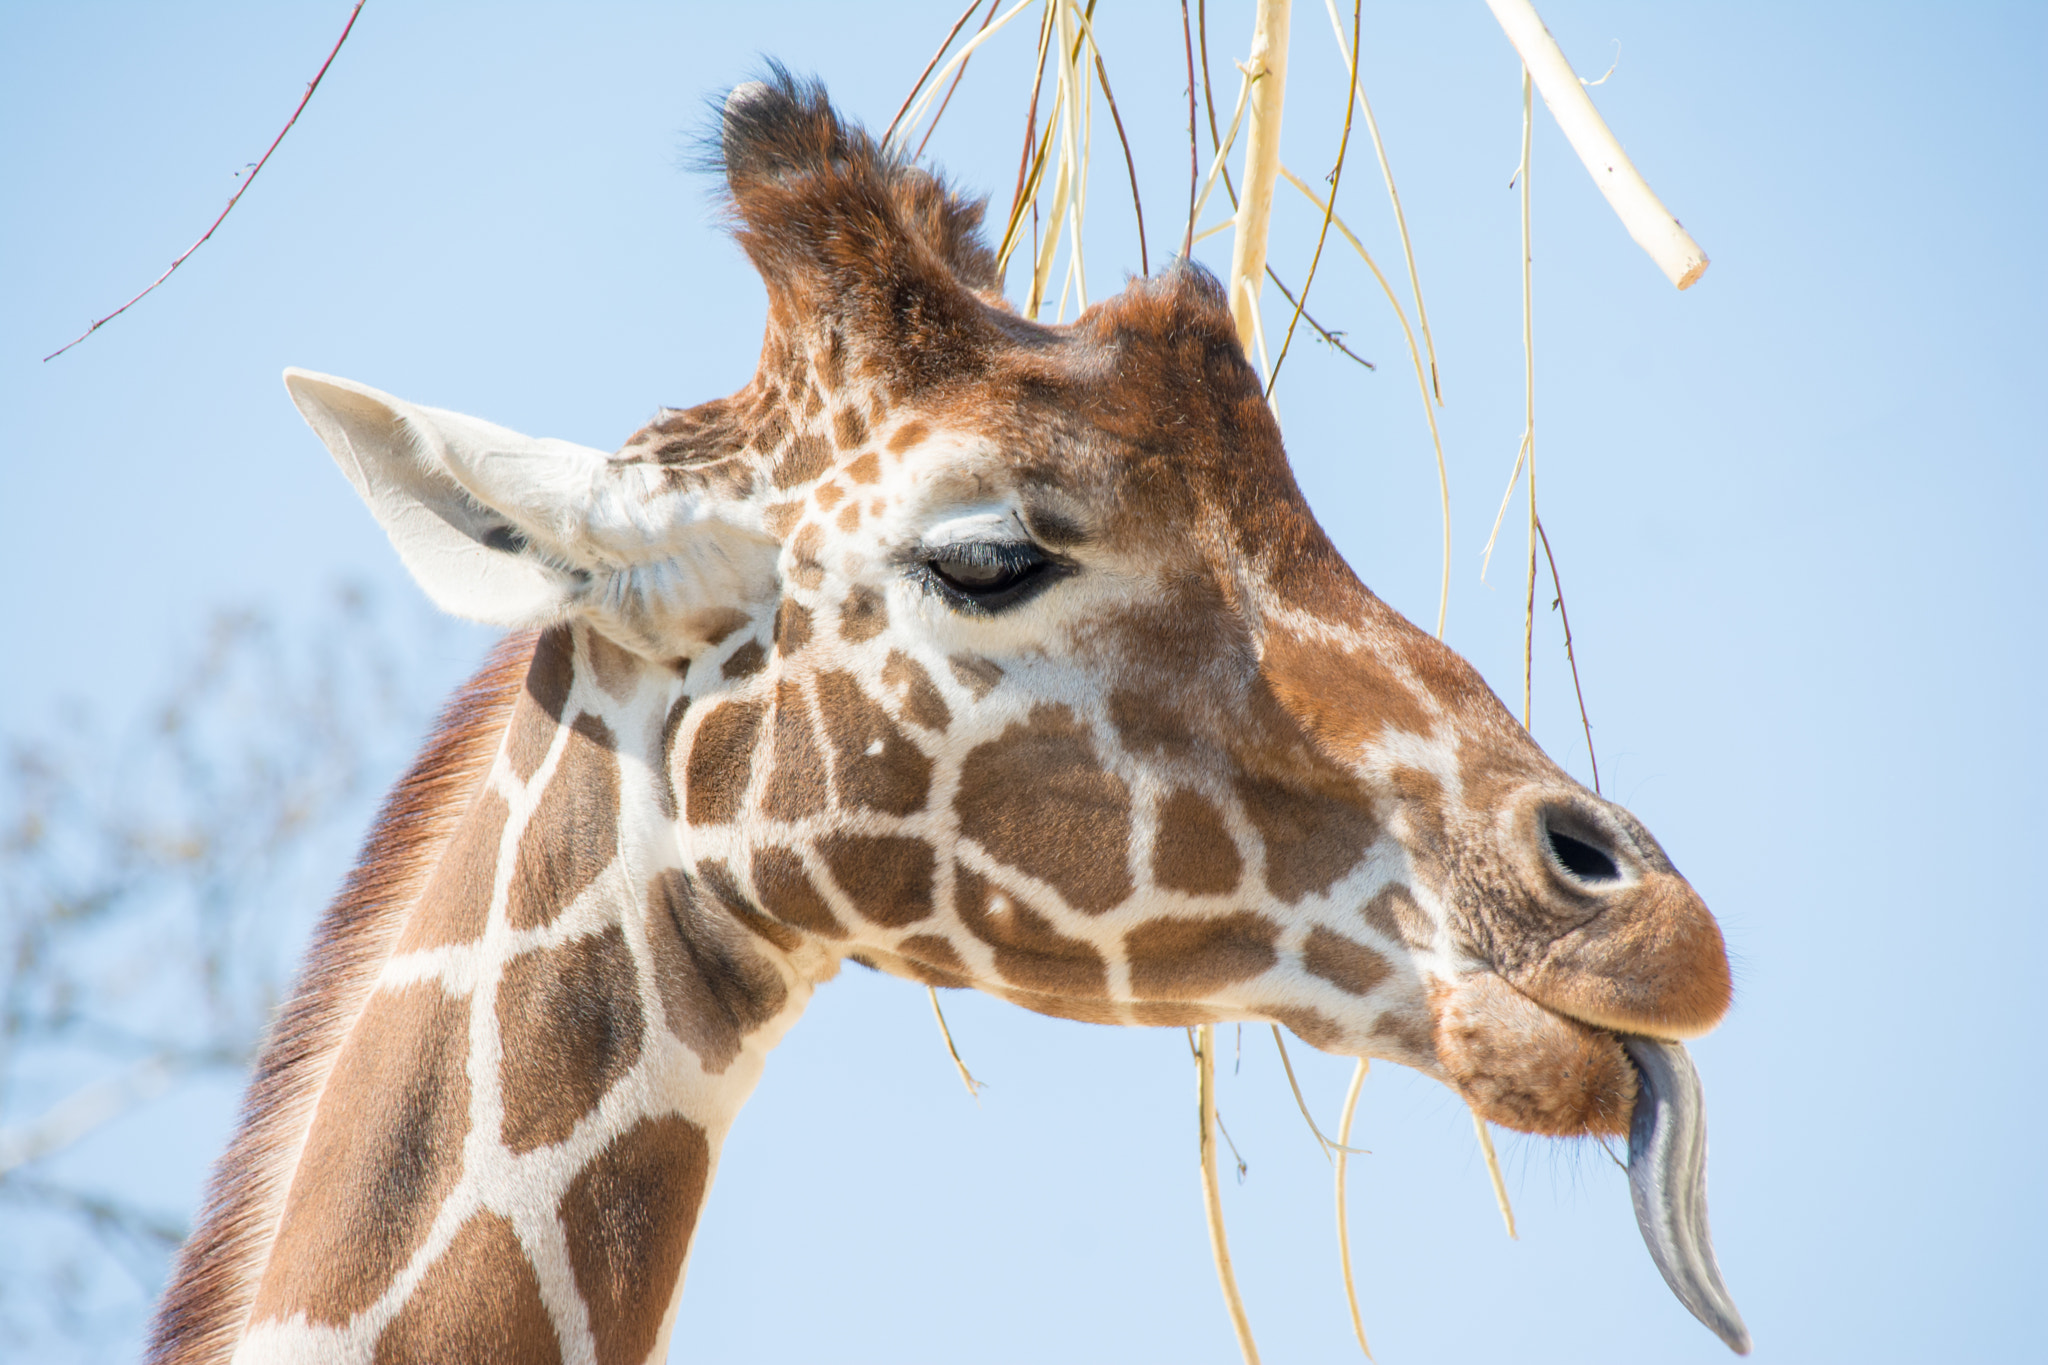 Giraffe's tongue.